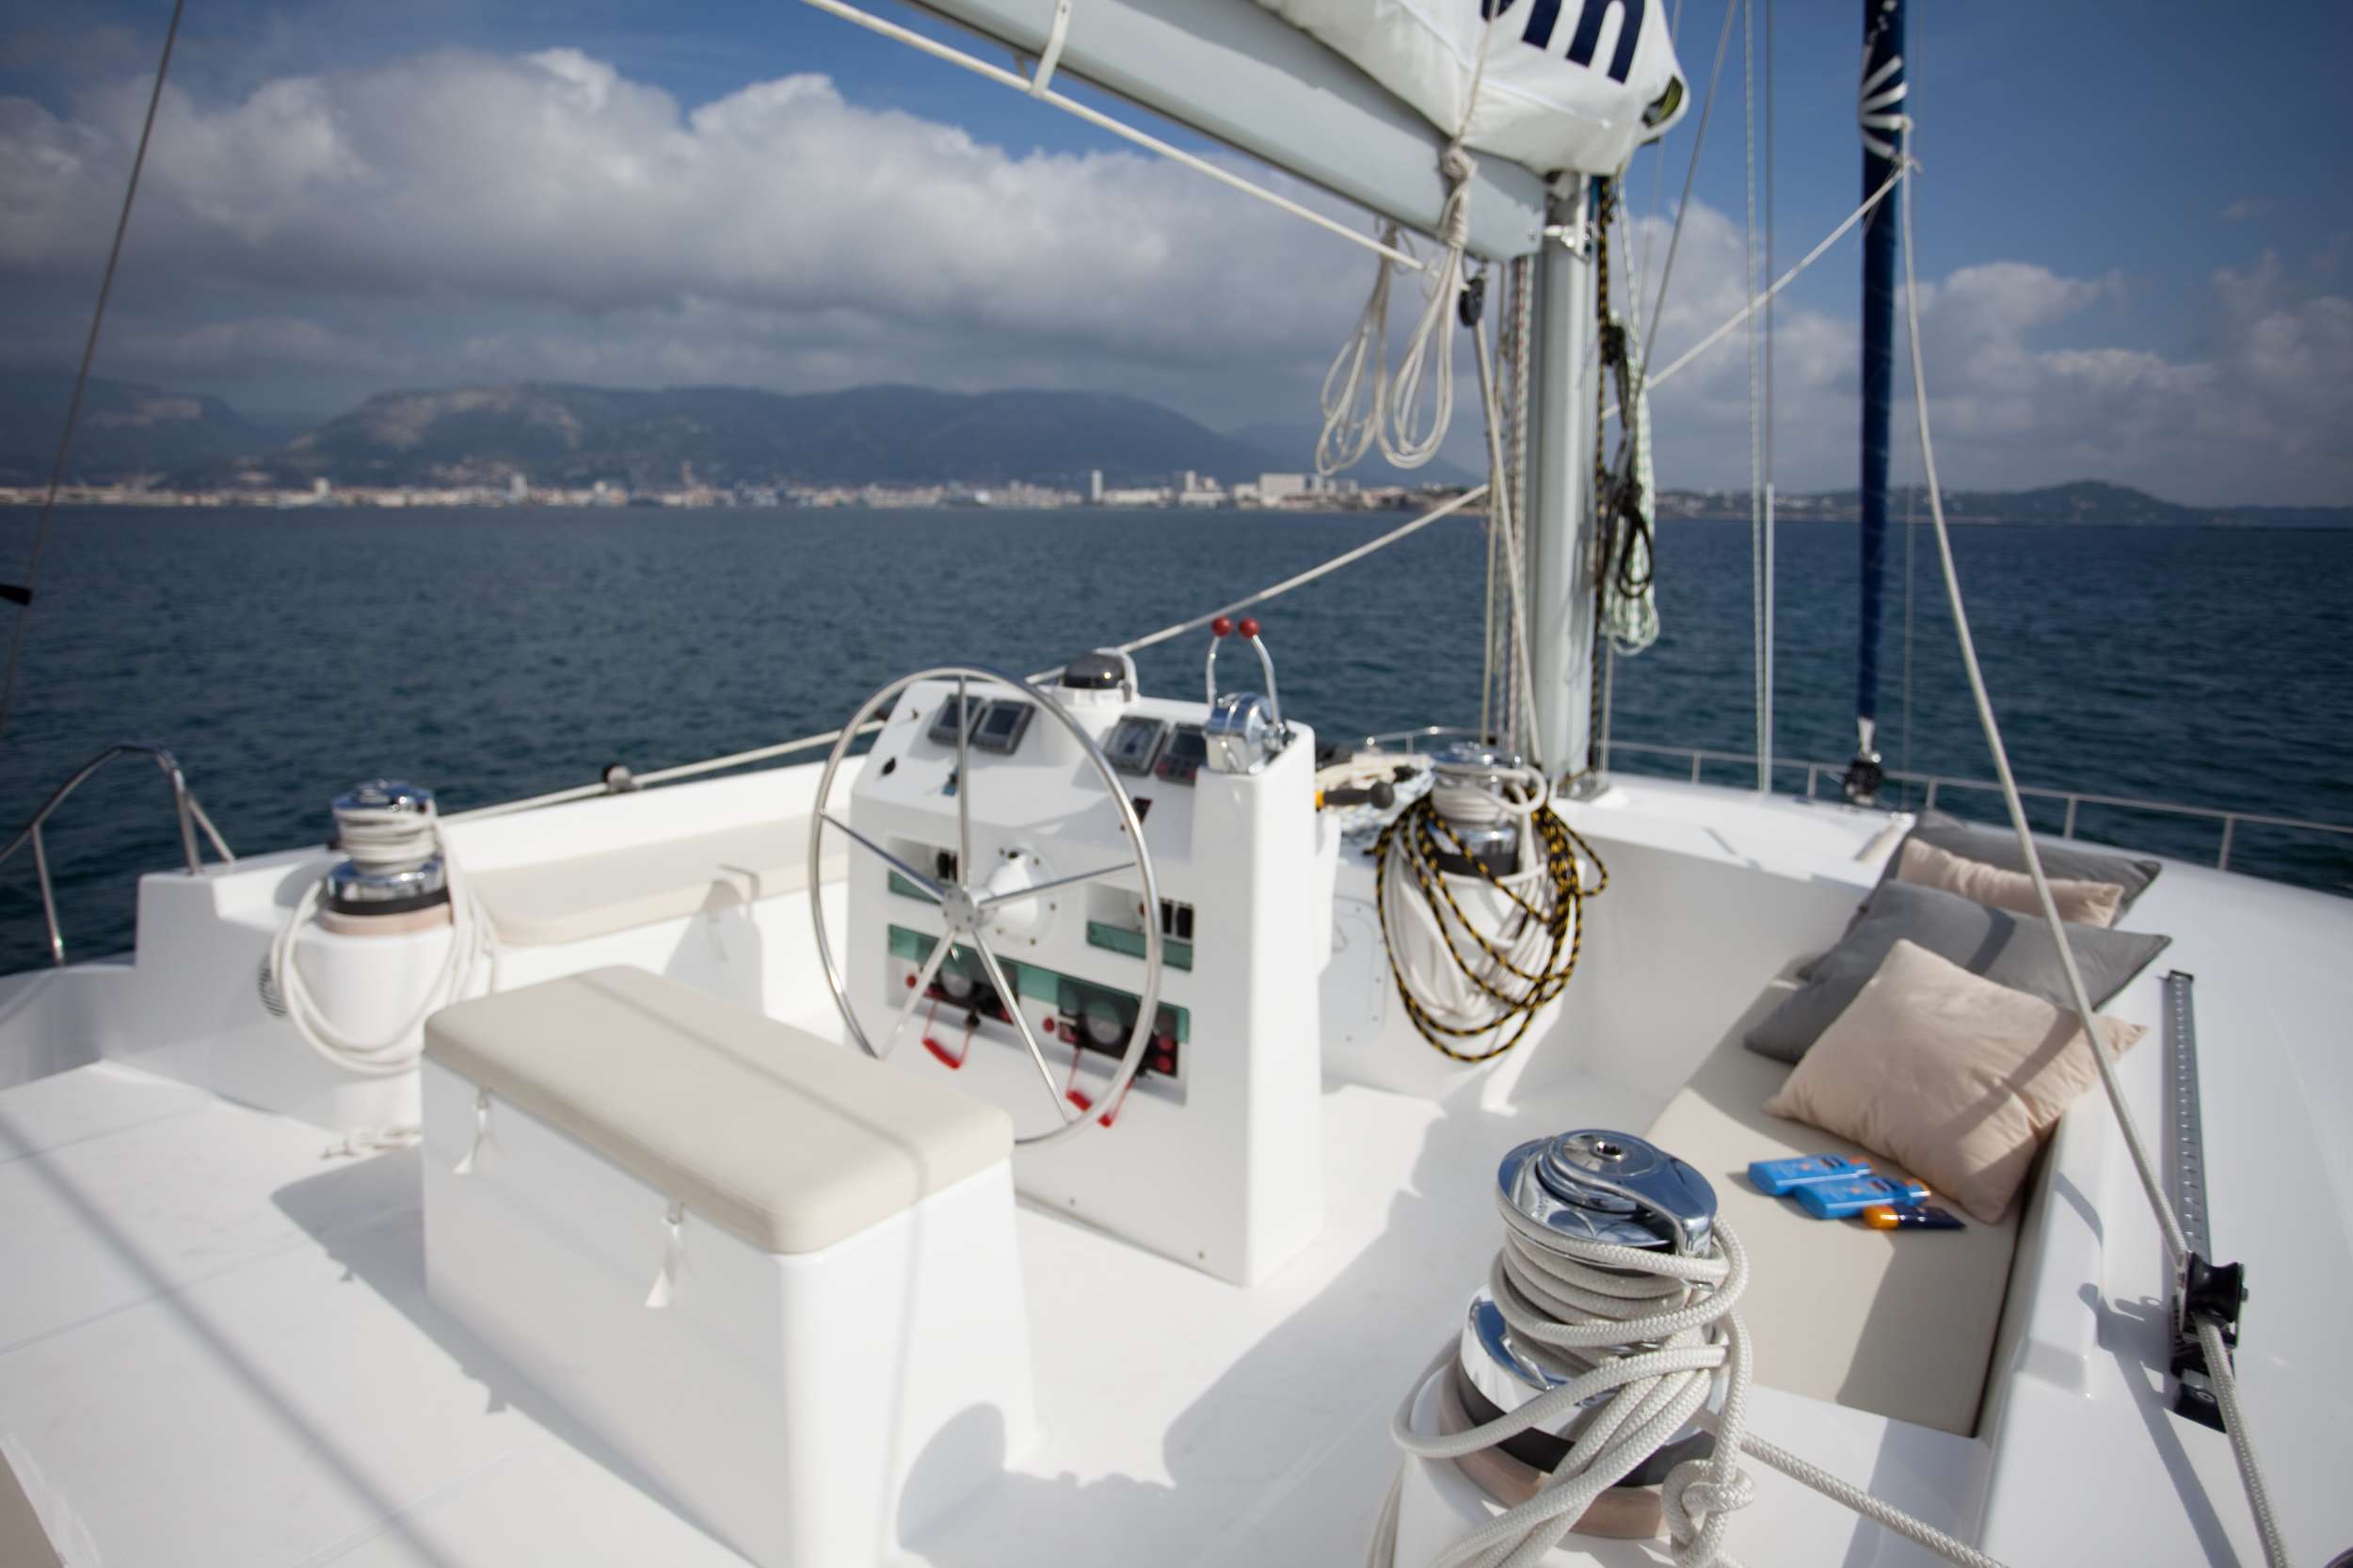 Dream 60 - Littr&eacute; &amp; Tauceti - Yacht Charter Kuredhivaru & Boat hire in W. Med -Naples/Sicily, W. Med - Spain/Balearics, Croatia Bahamas, Indian Ocean and SE Asia 4